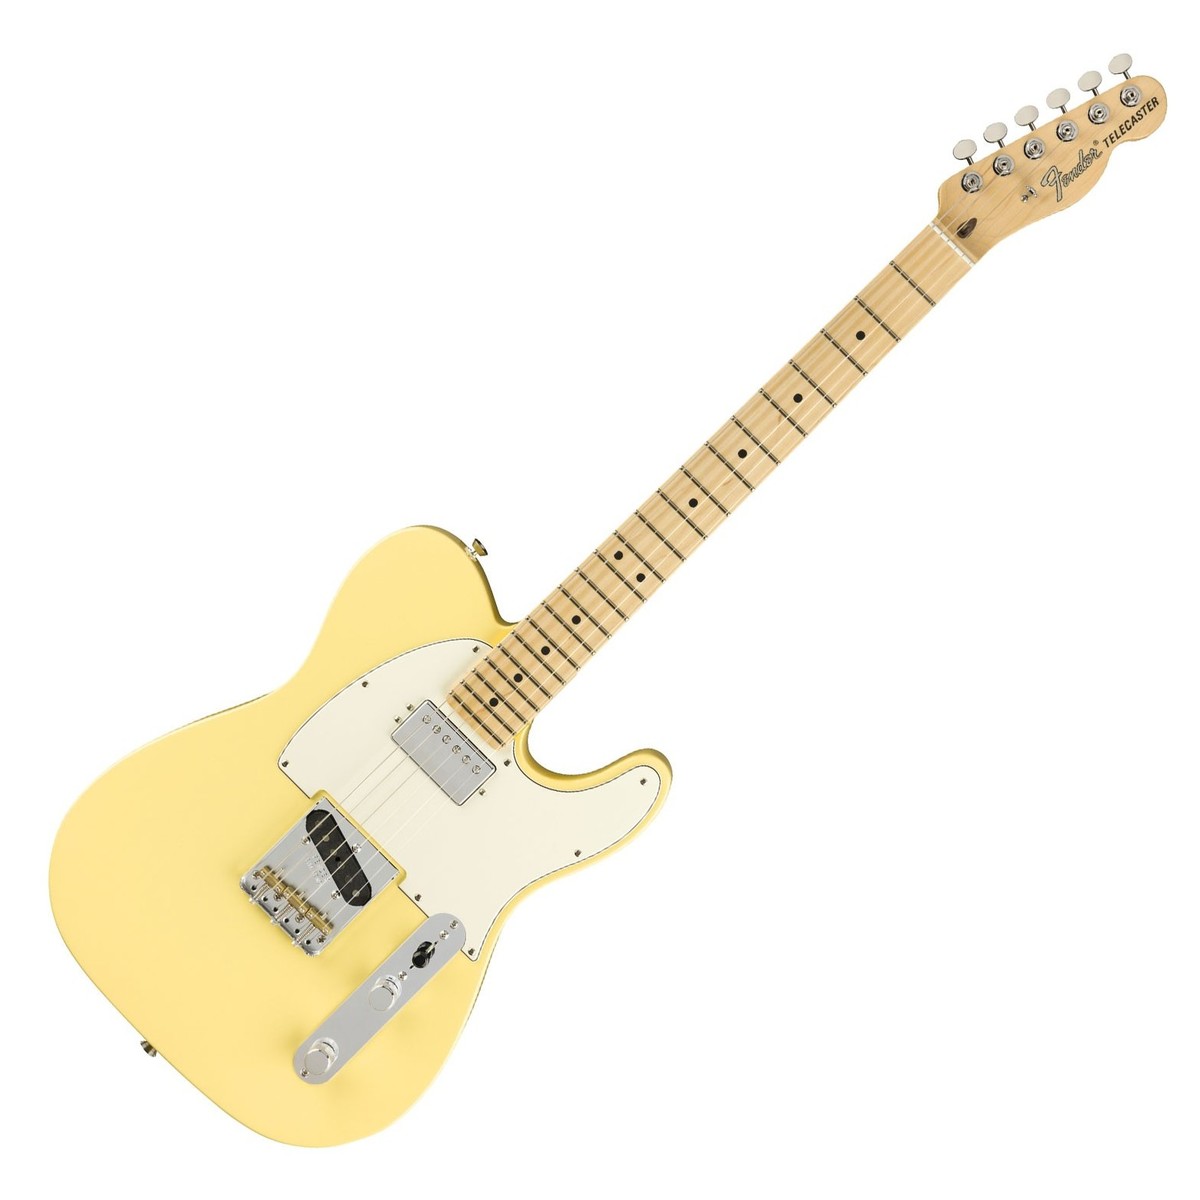 Fender American Performer Telecaster SH Deluxe Humbucker Vintage White  Maple Fretboard USA Electric Guitar